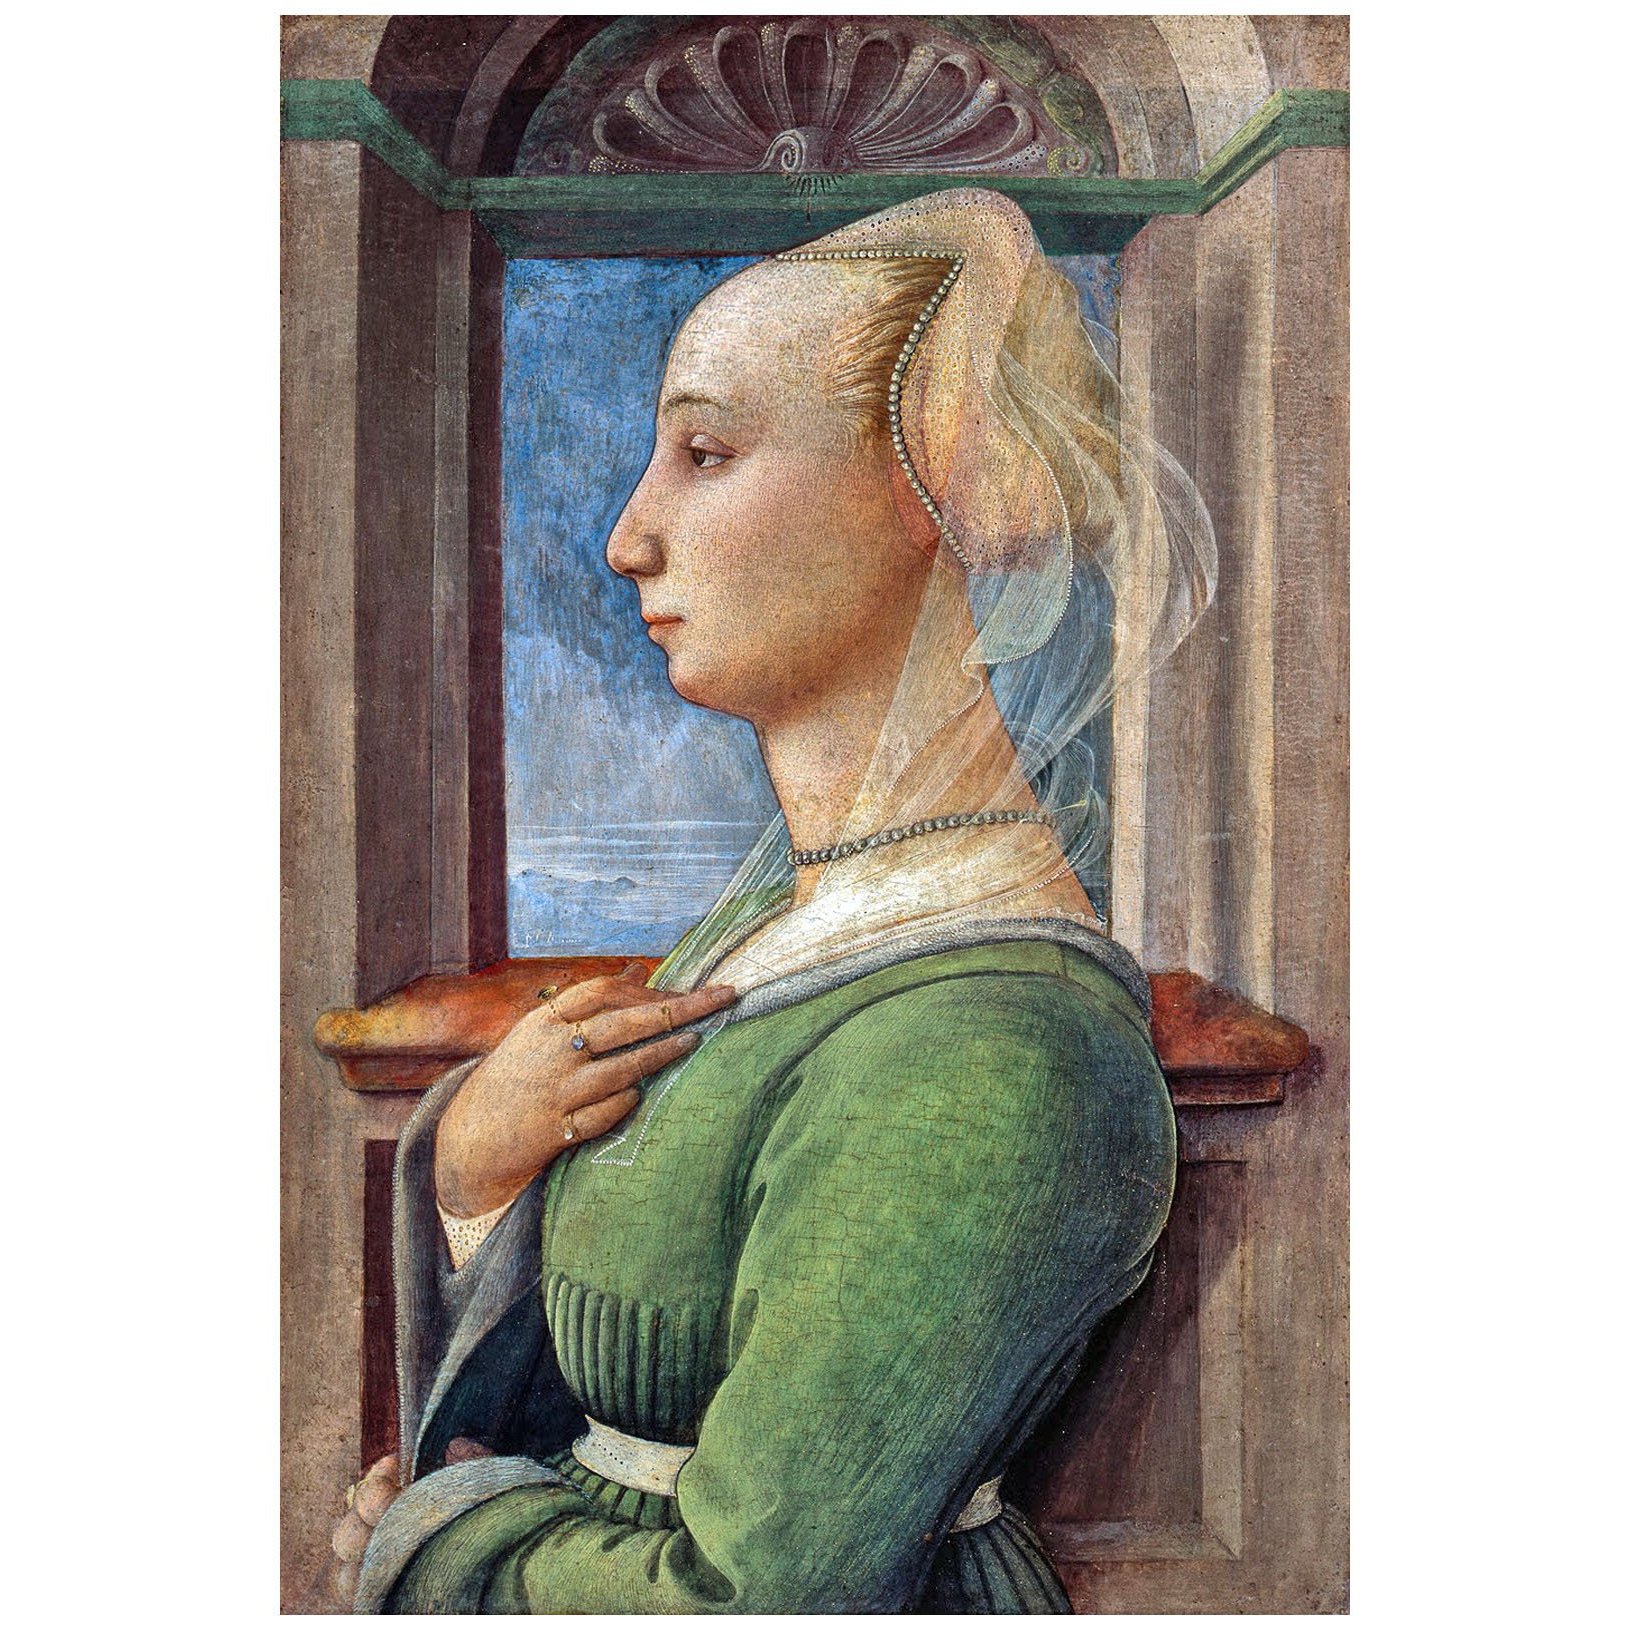 Fra Folippo Lippi. Ritratto femminile. 1445. Gemaldegalerie Berlin